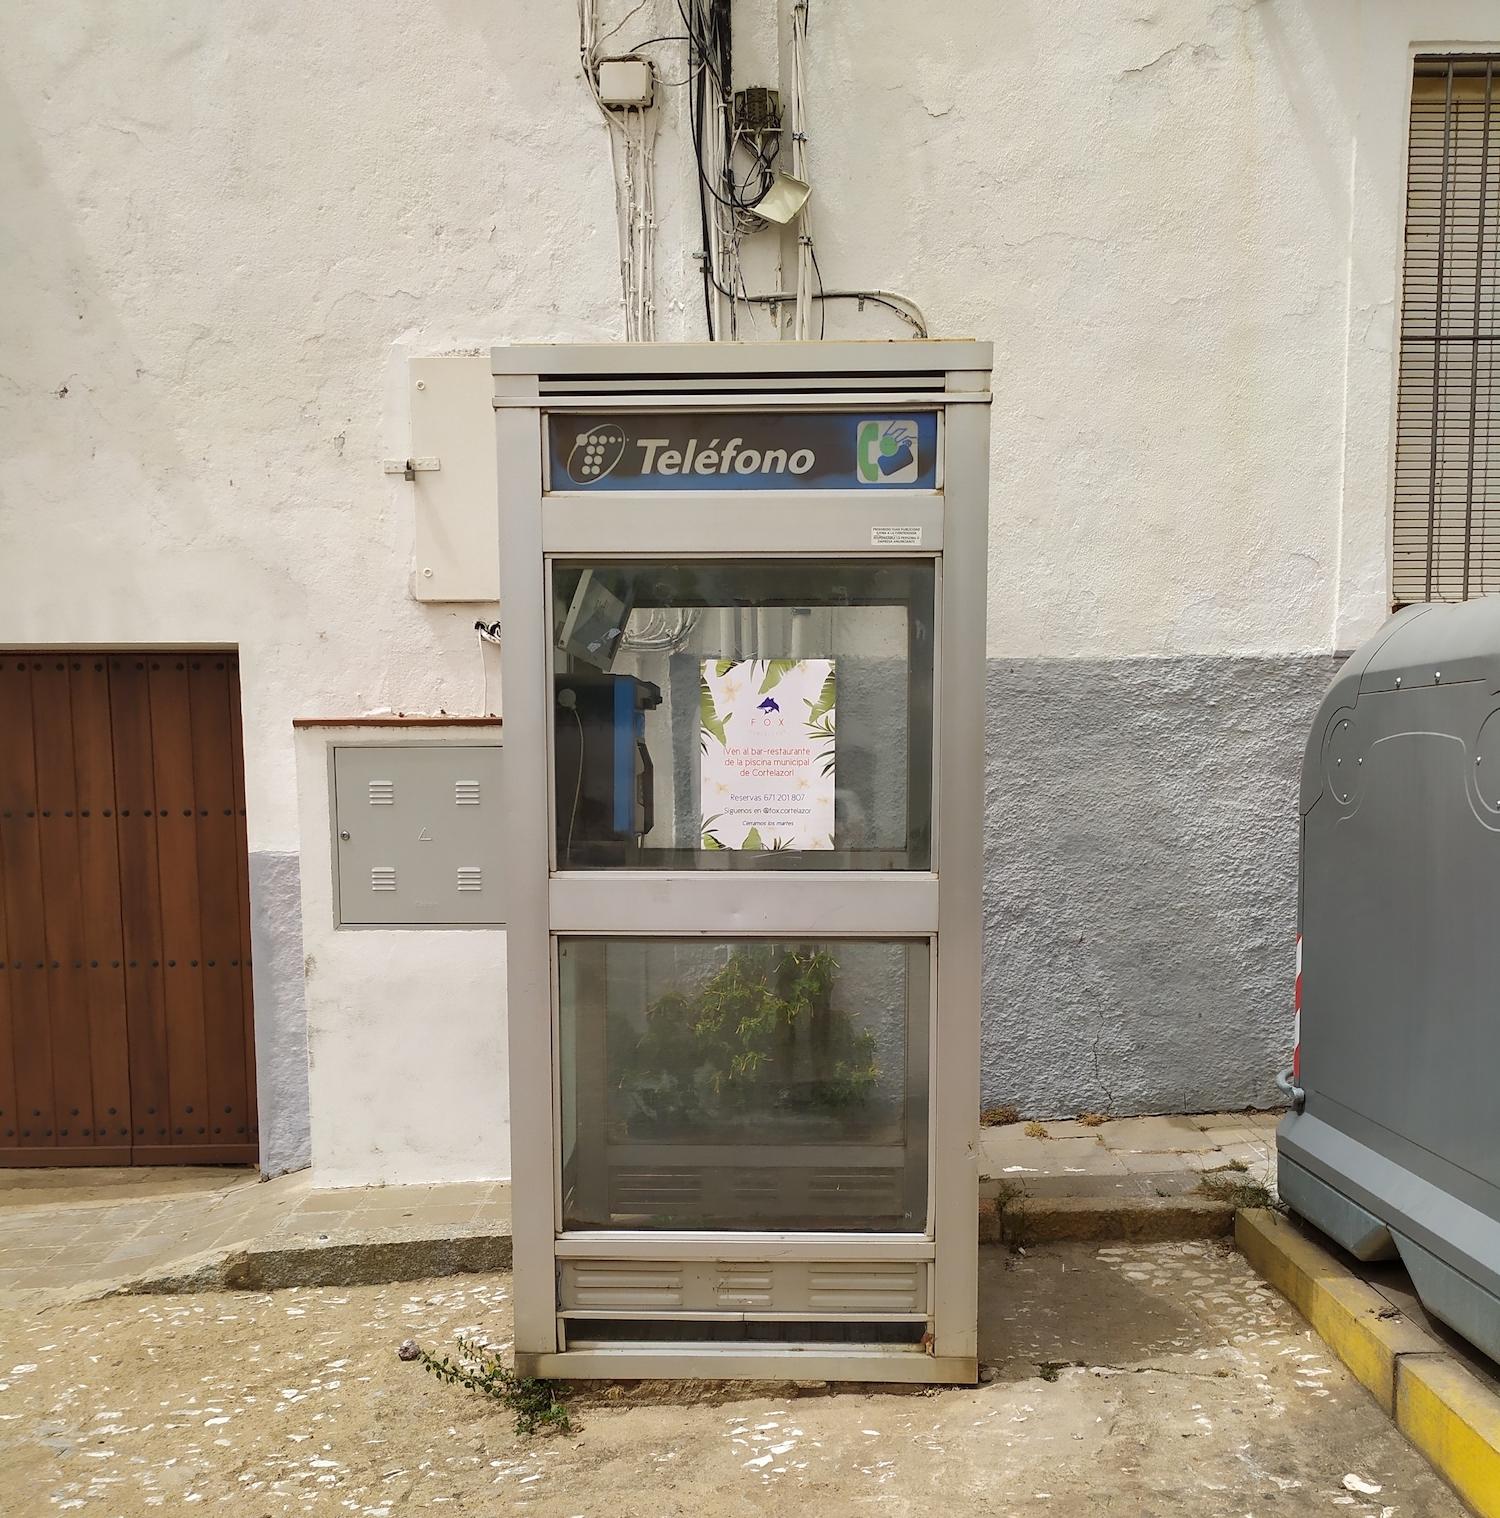 Unancabina de teléfonos en Aracena (Huelva) ©Leequid Magazine